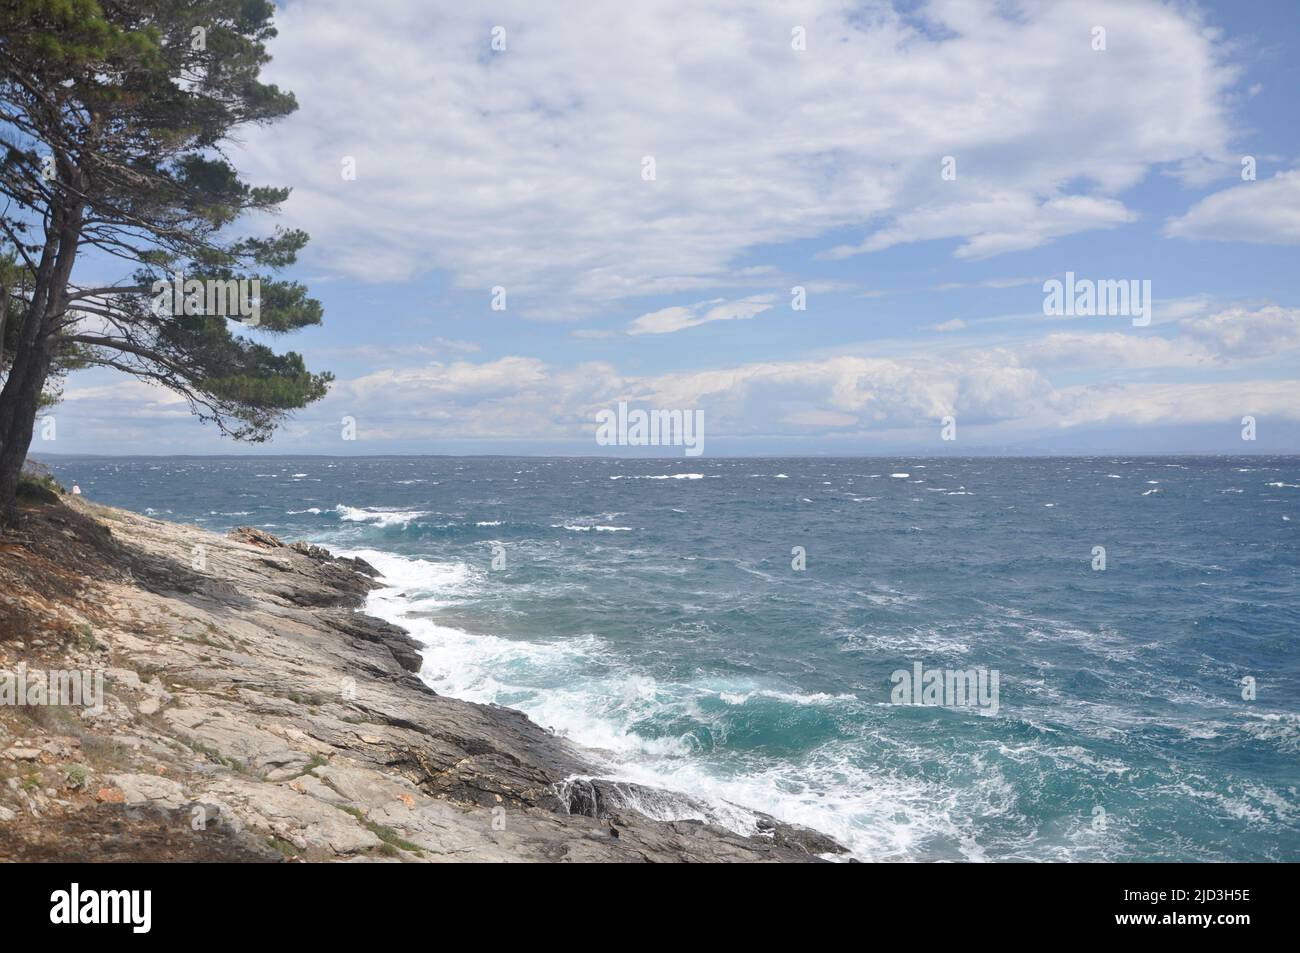 Landscape view of adriatic sea and stormy waves splashing on the coast. Beautiful amazing stunning seascape, waves crashing on rocks during a storm Stock Photo